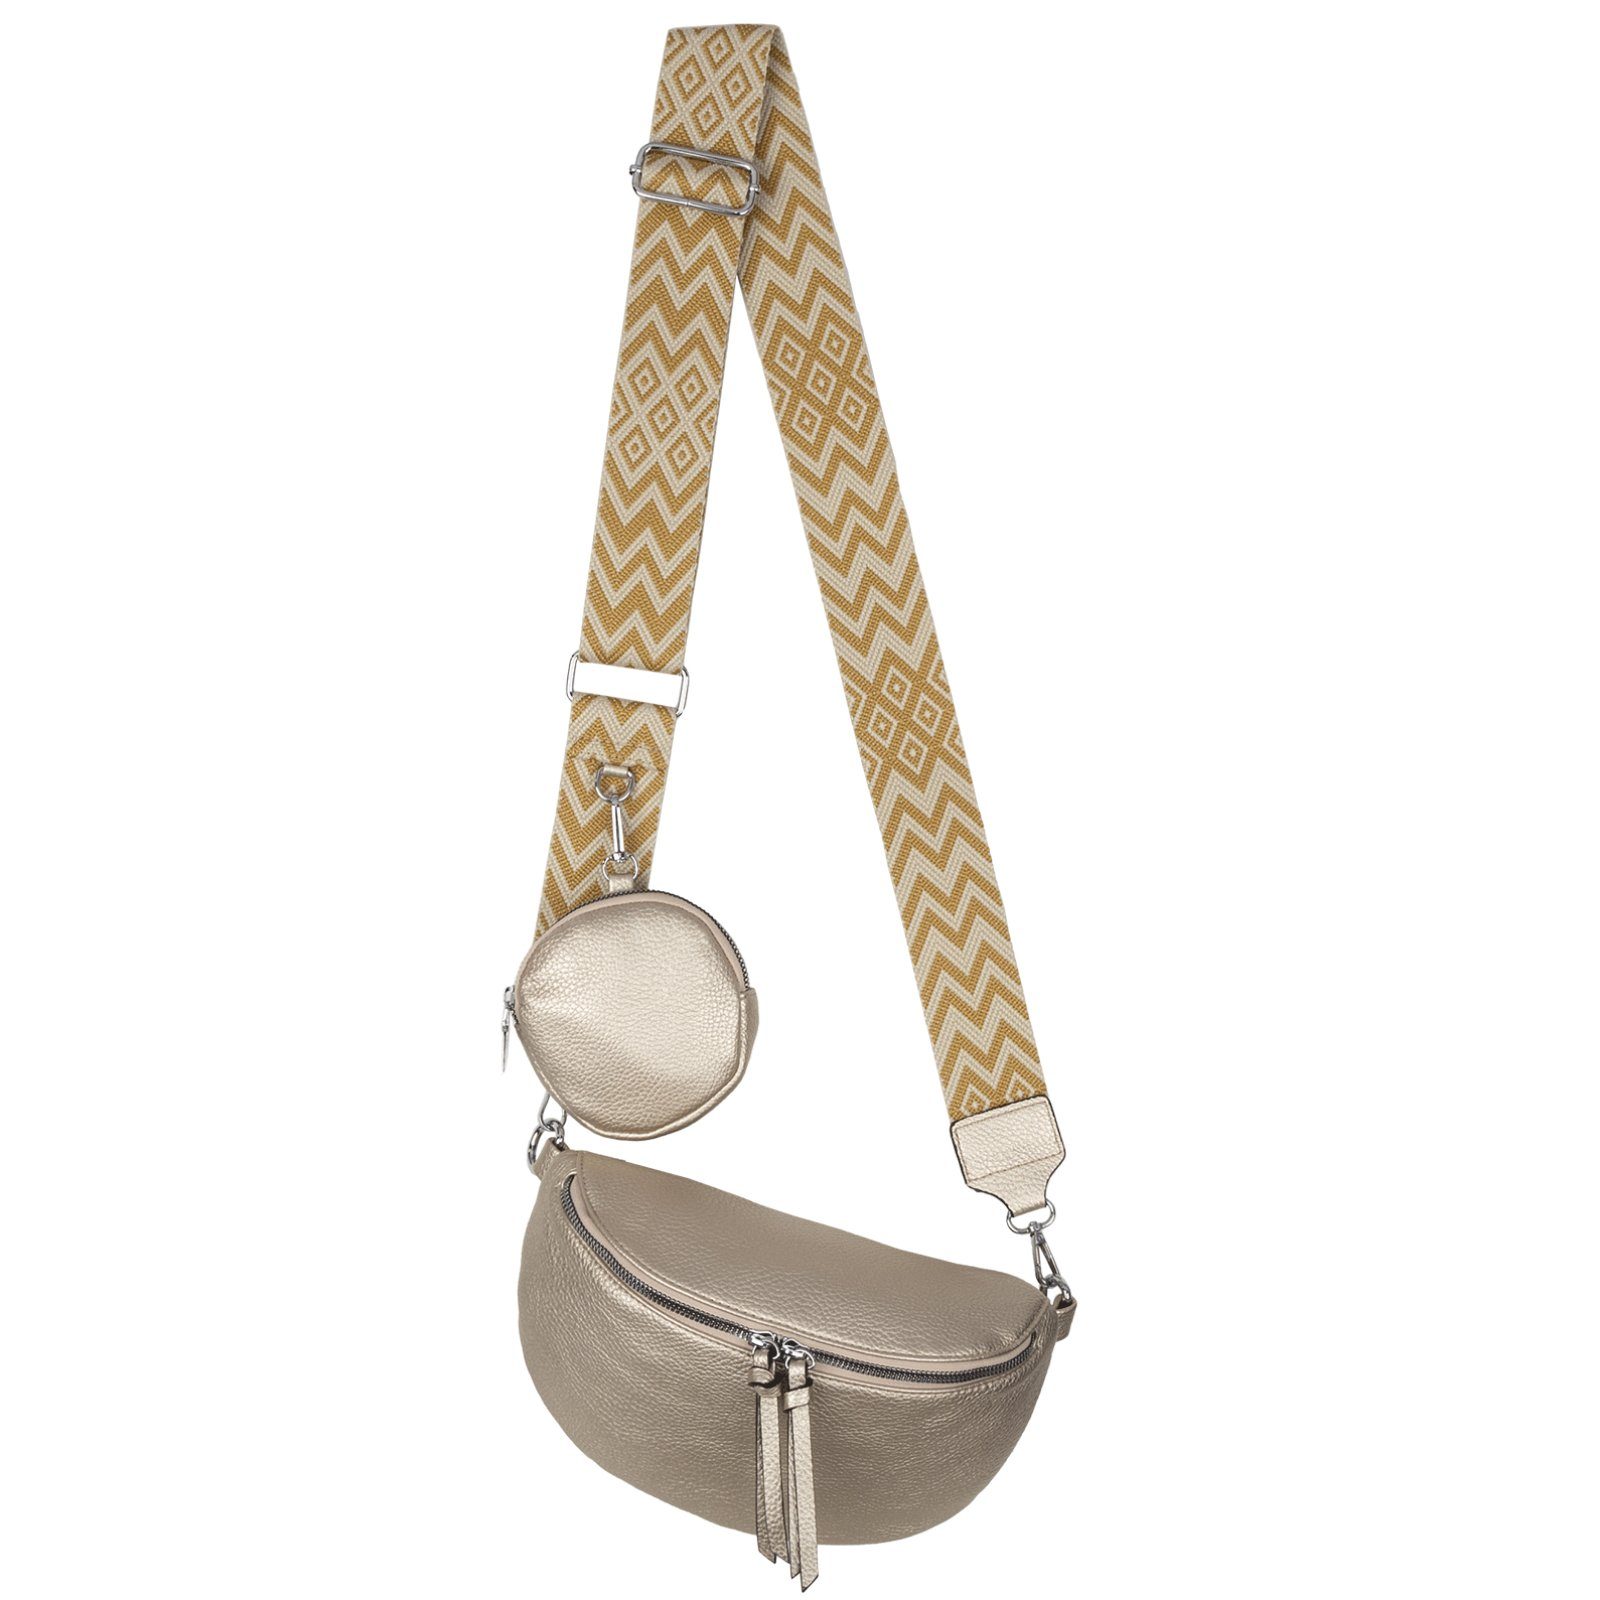 EAAKIE Gürteltasche Bauchtasche Umhängetasche Crossbody-Bag Hüfttasche Kunstleder Italy-D, als Schultertasche, CrossOver, Umhängetasche tragbar GOLD